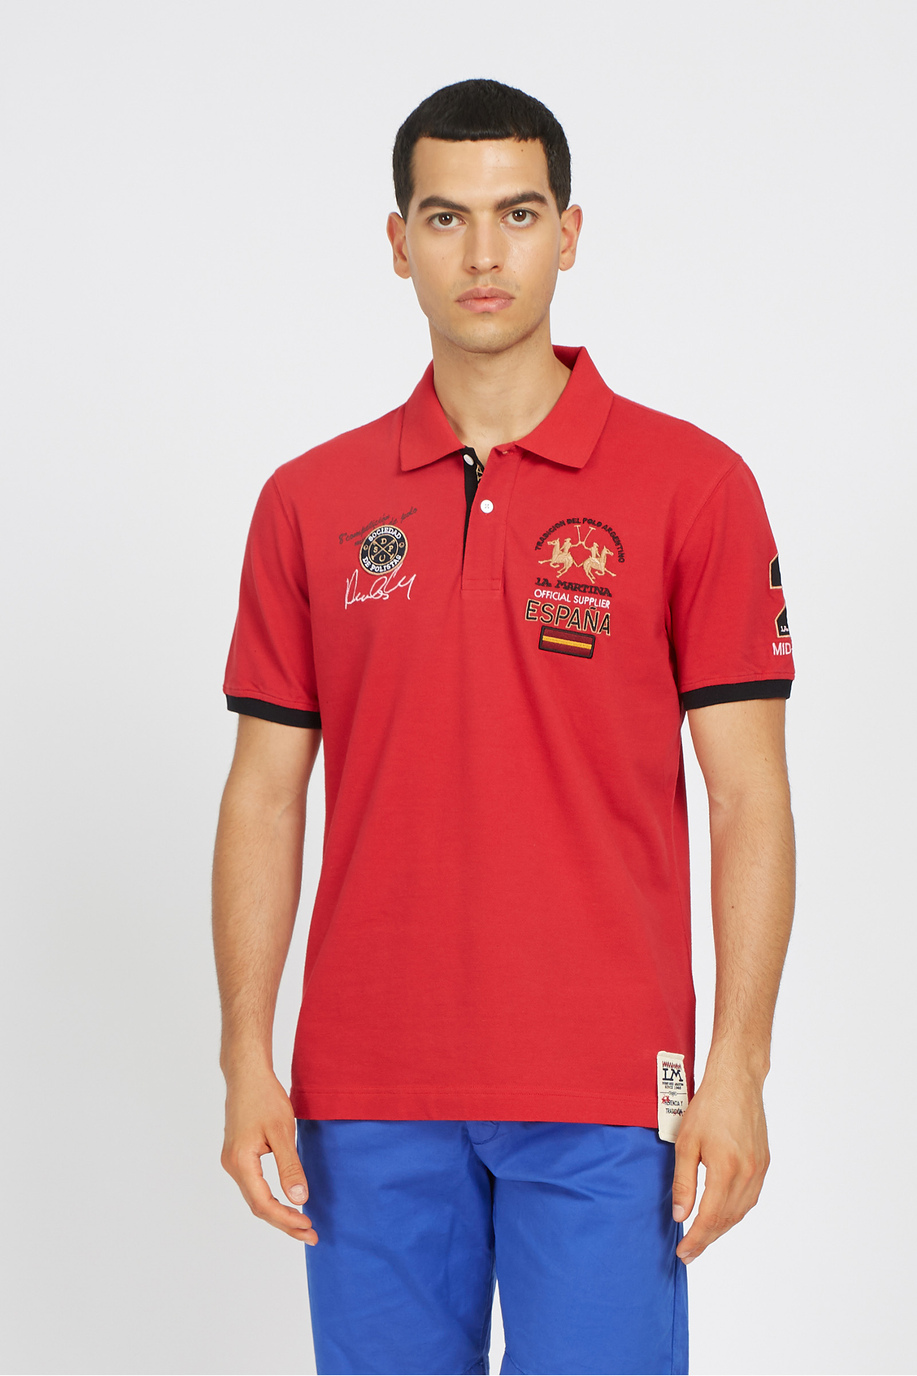 Regular fit 100% cotton short-sleeved polo shirt for men - Vireo - Replicas of major tournaments | La Martina - Official Online Shop